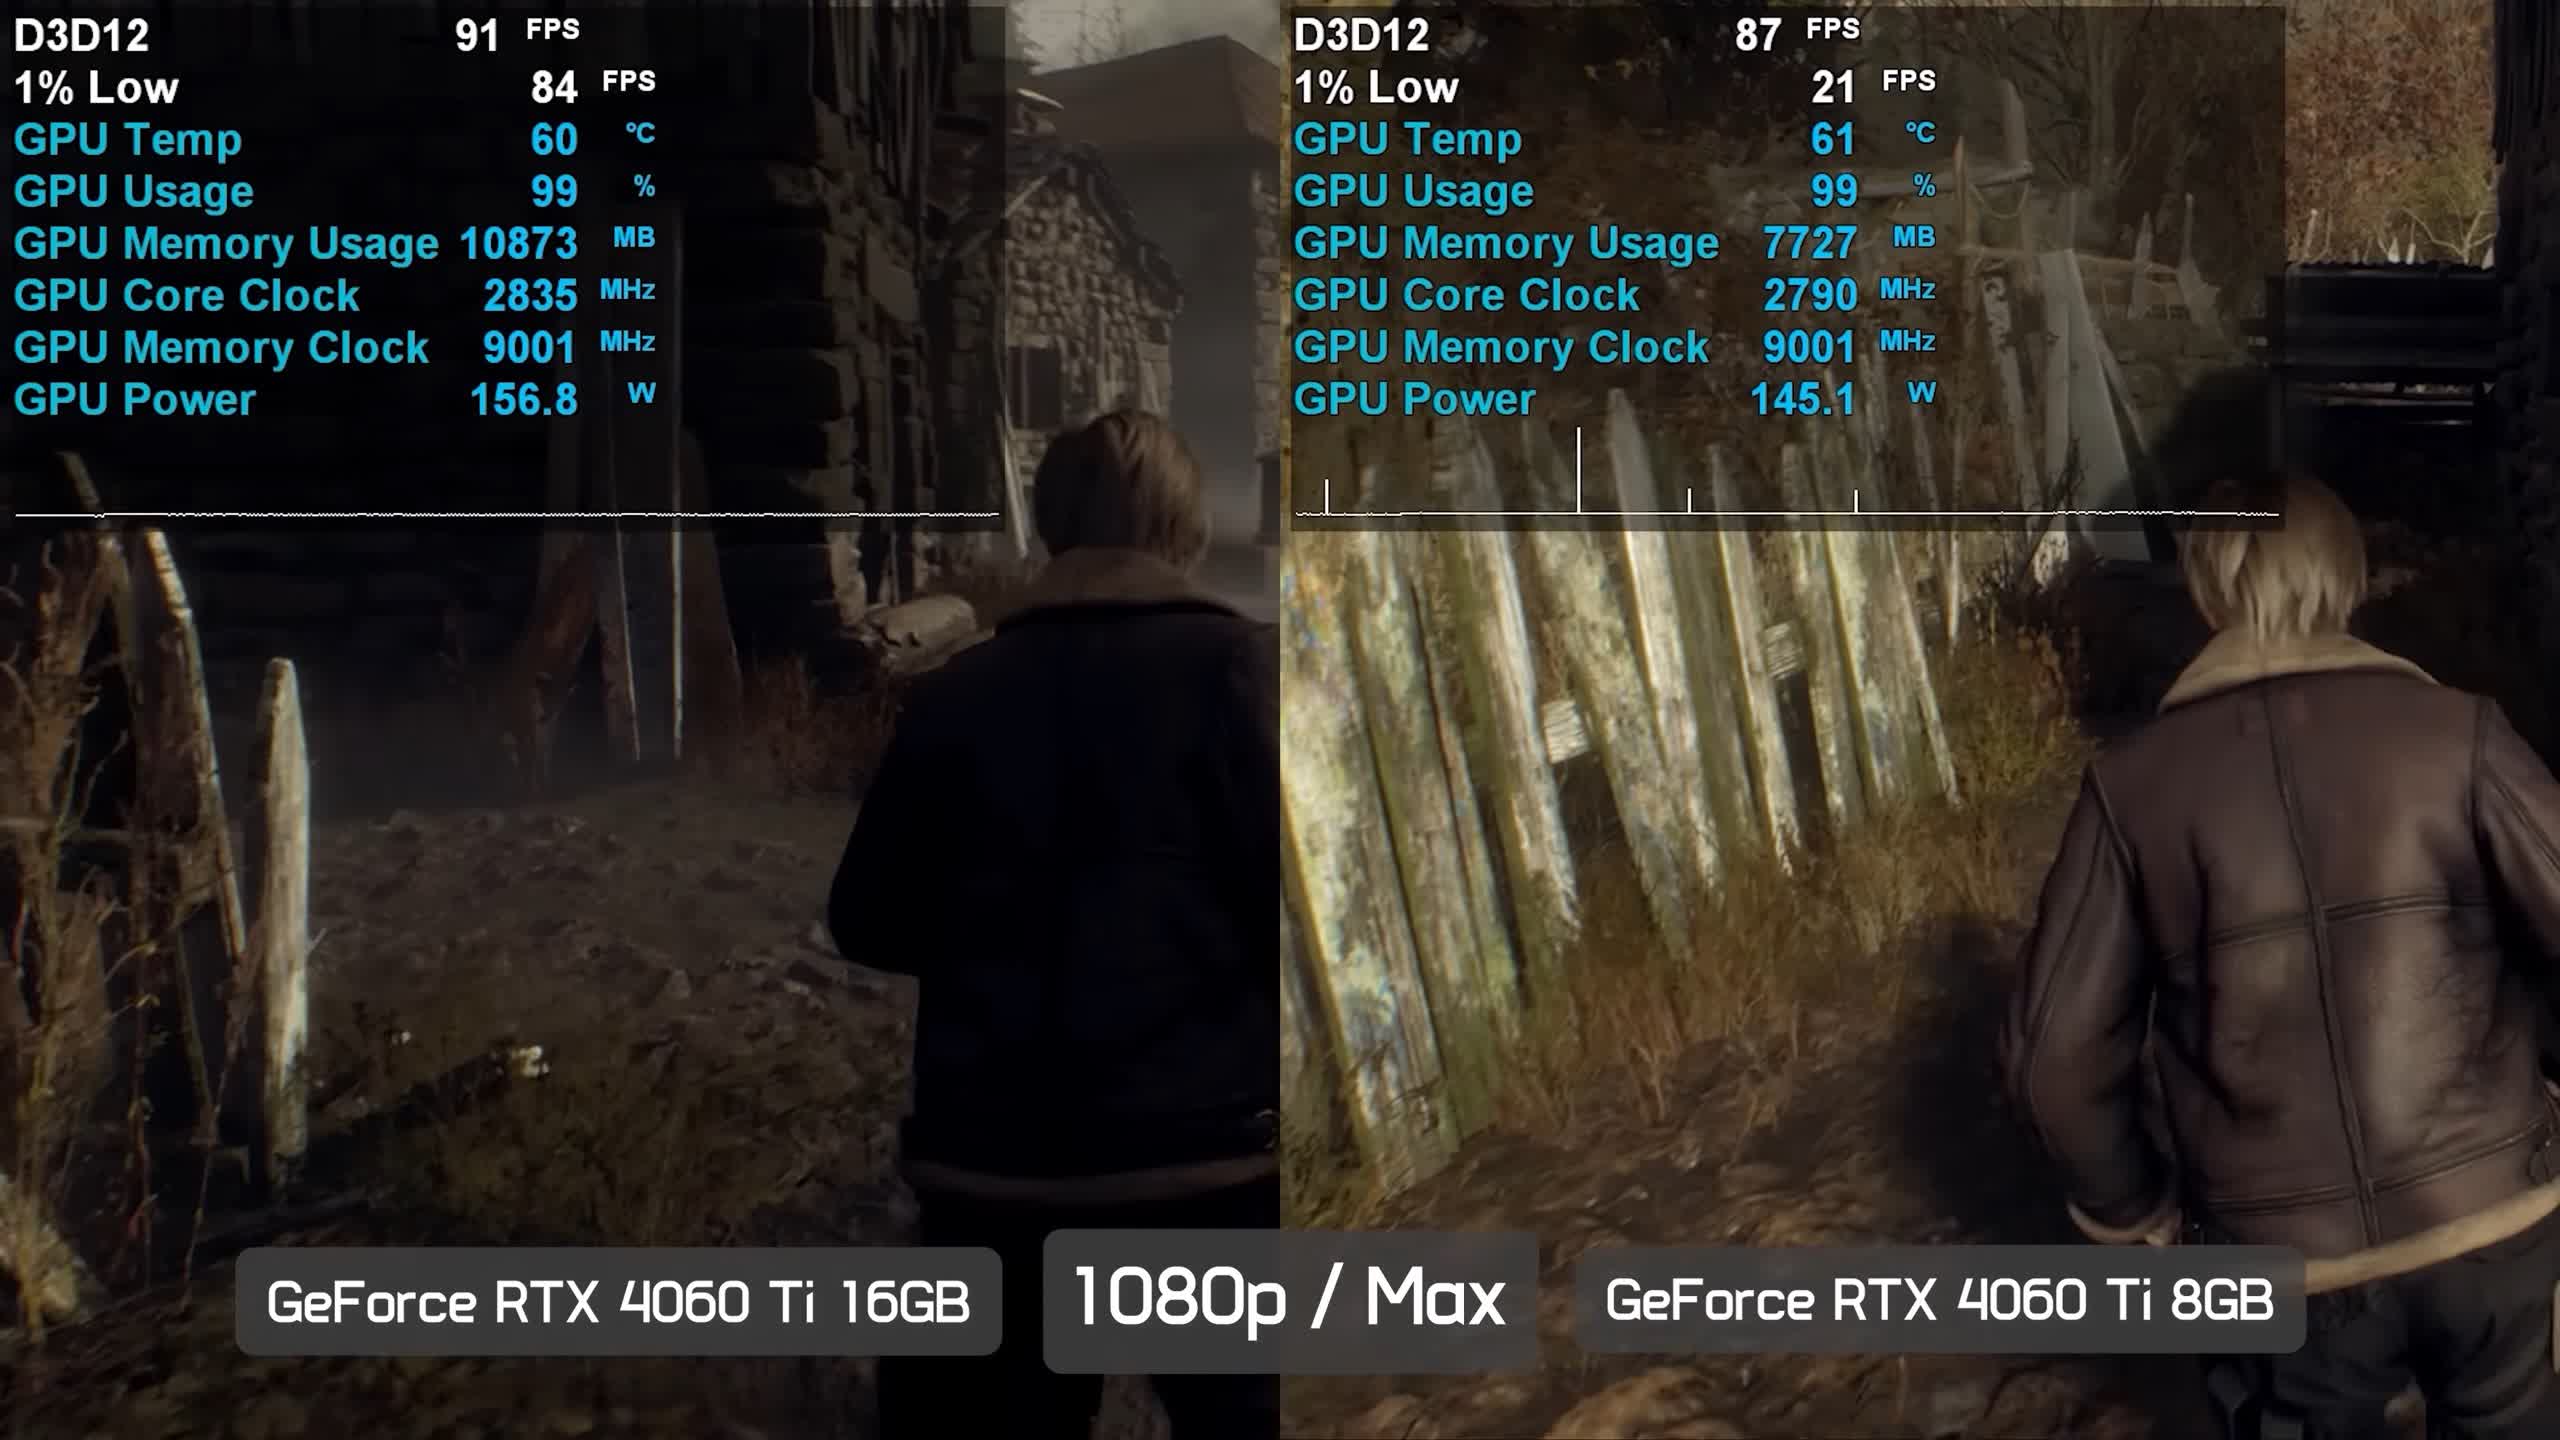 svg+xml,%3Csvg%20xmlns= Nvidia GeForce RTX 4060 Ti 16GB Đã được đánh giá, Điểm chuẩn